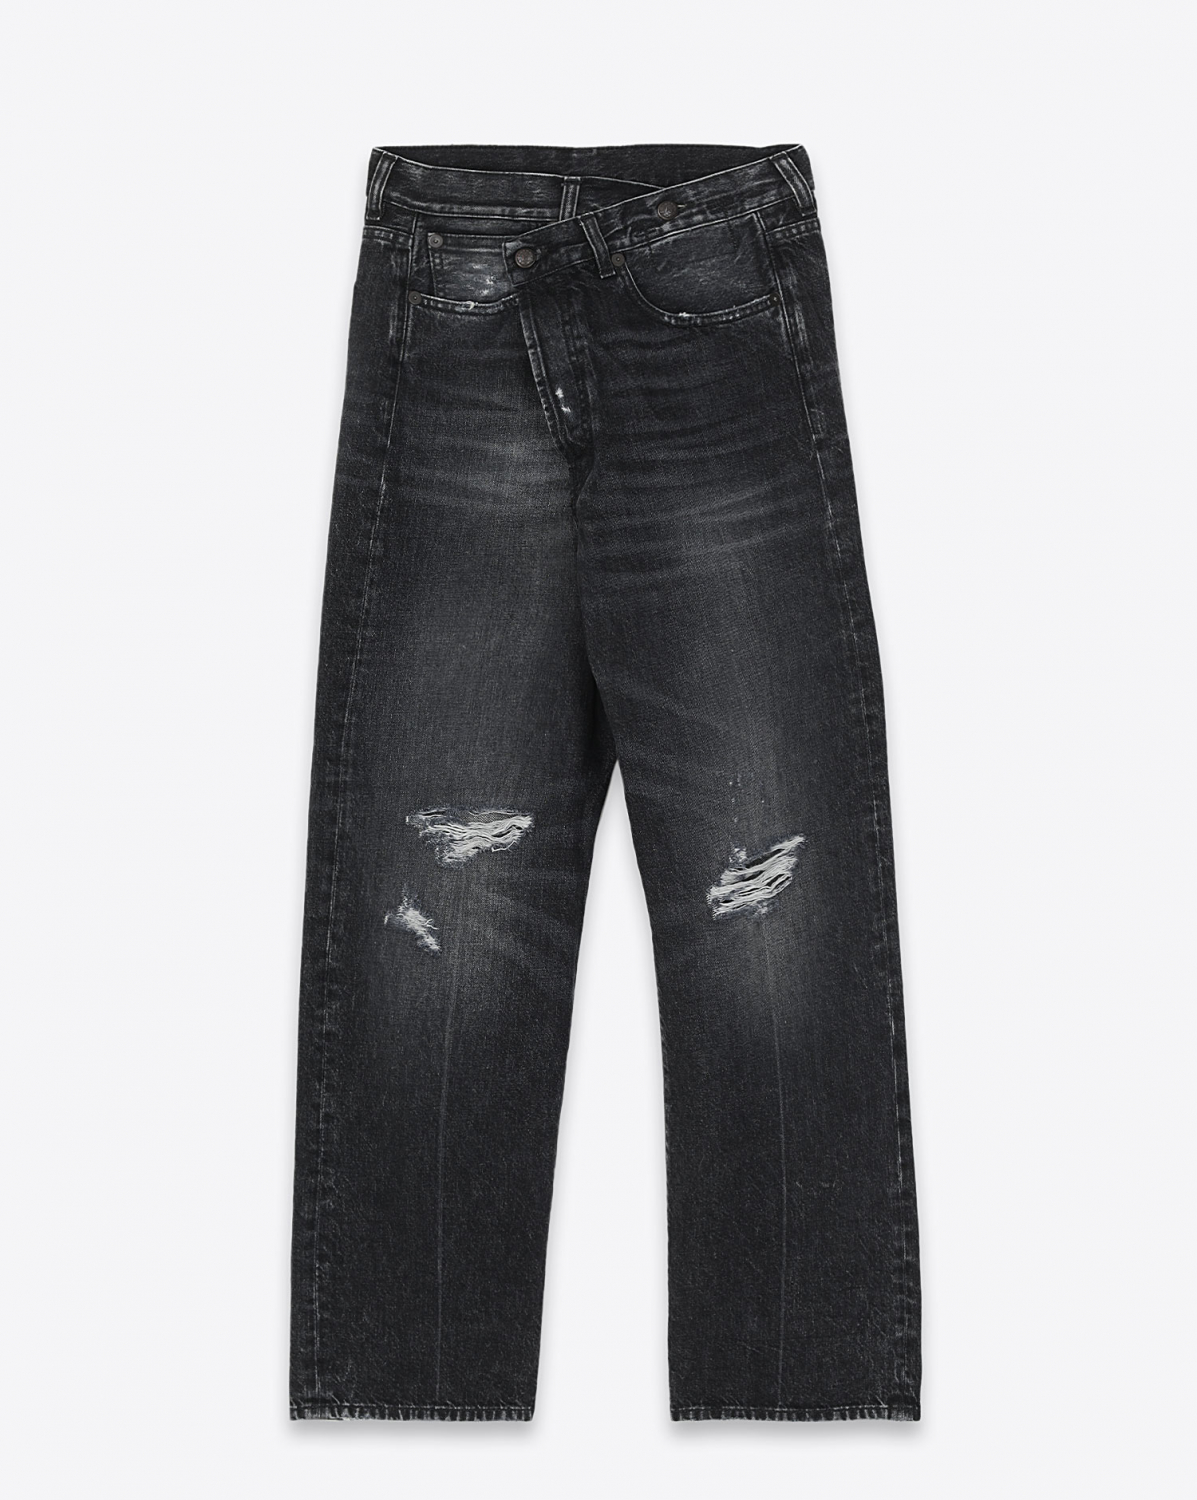 Jeans R13 Denim Collection Wide Leg Crossover - Everit Black